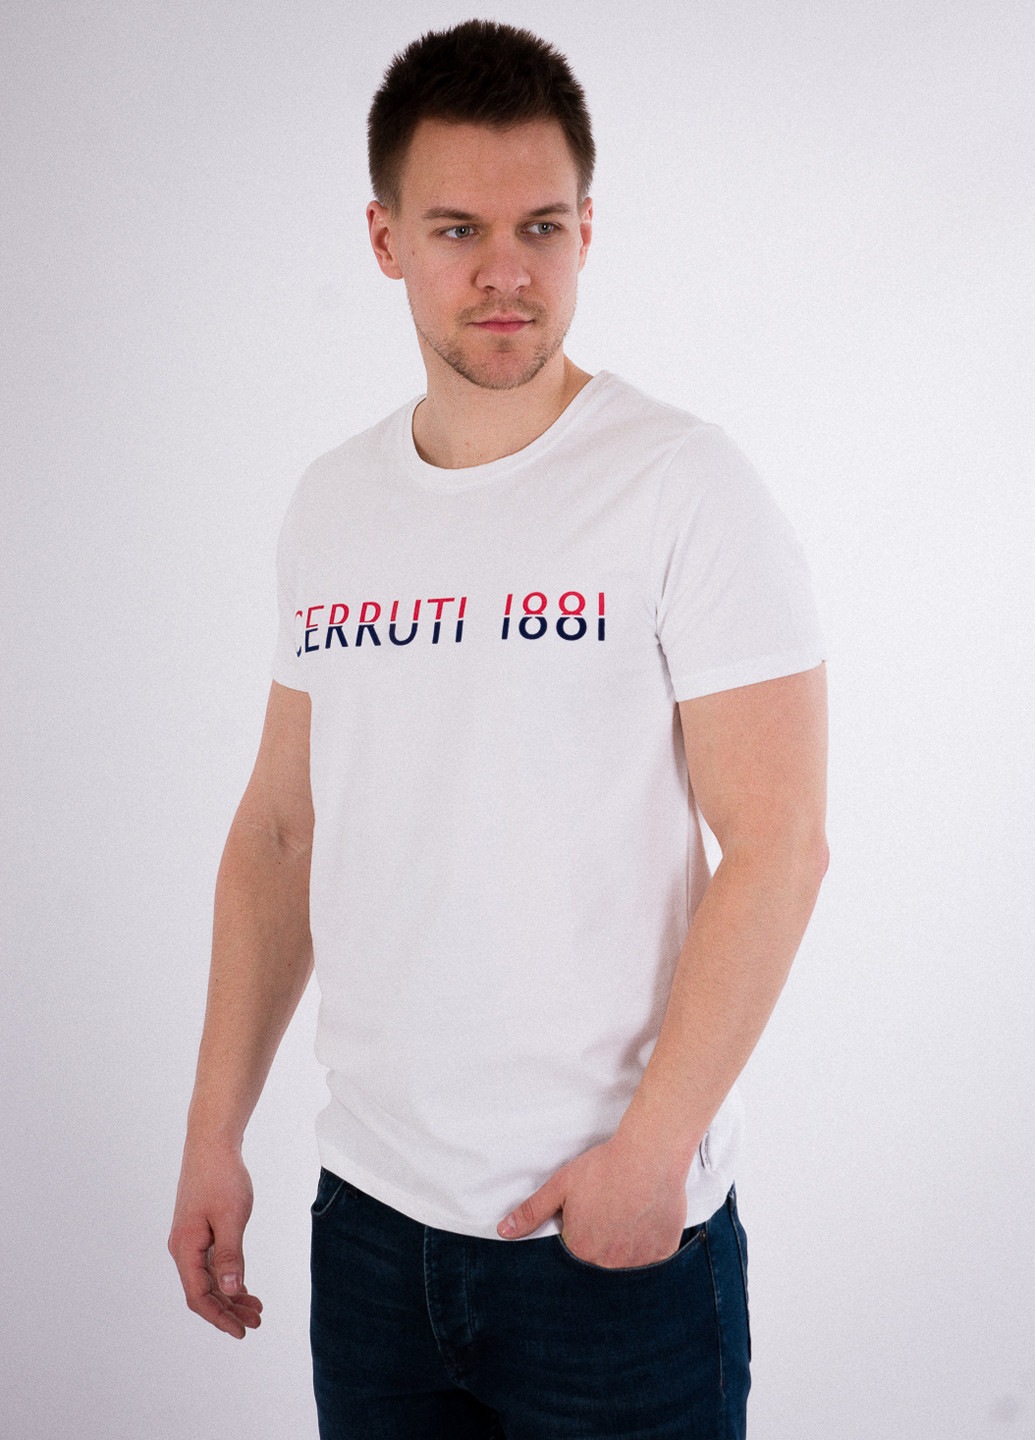 Белая футболка Cerruti 1881